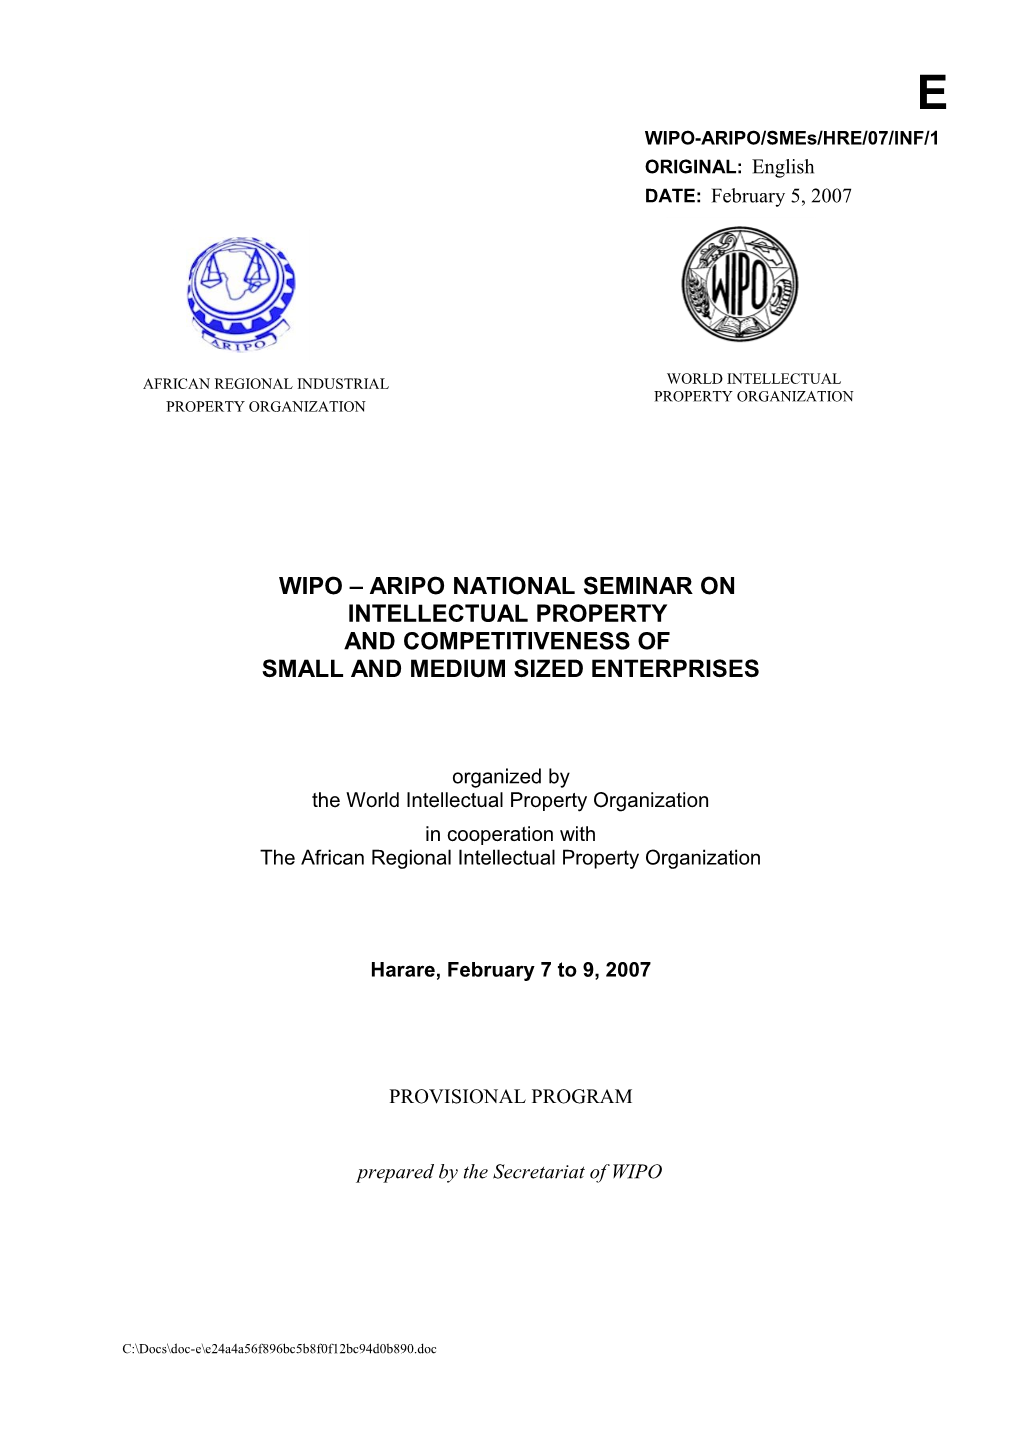 WIPO-ARIPO/SMES/HRE/07/INF/1: Provisional Program